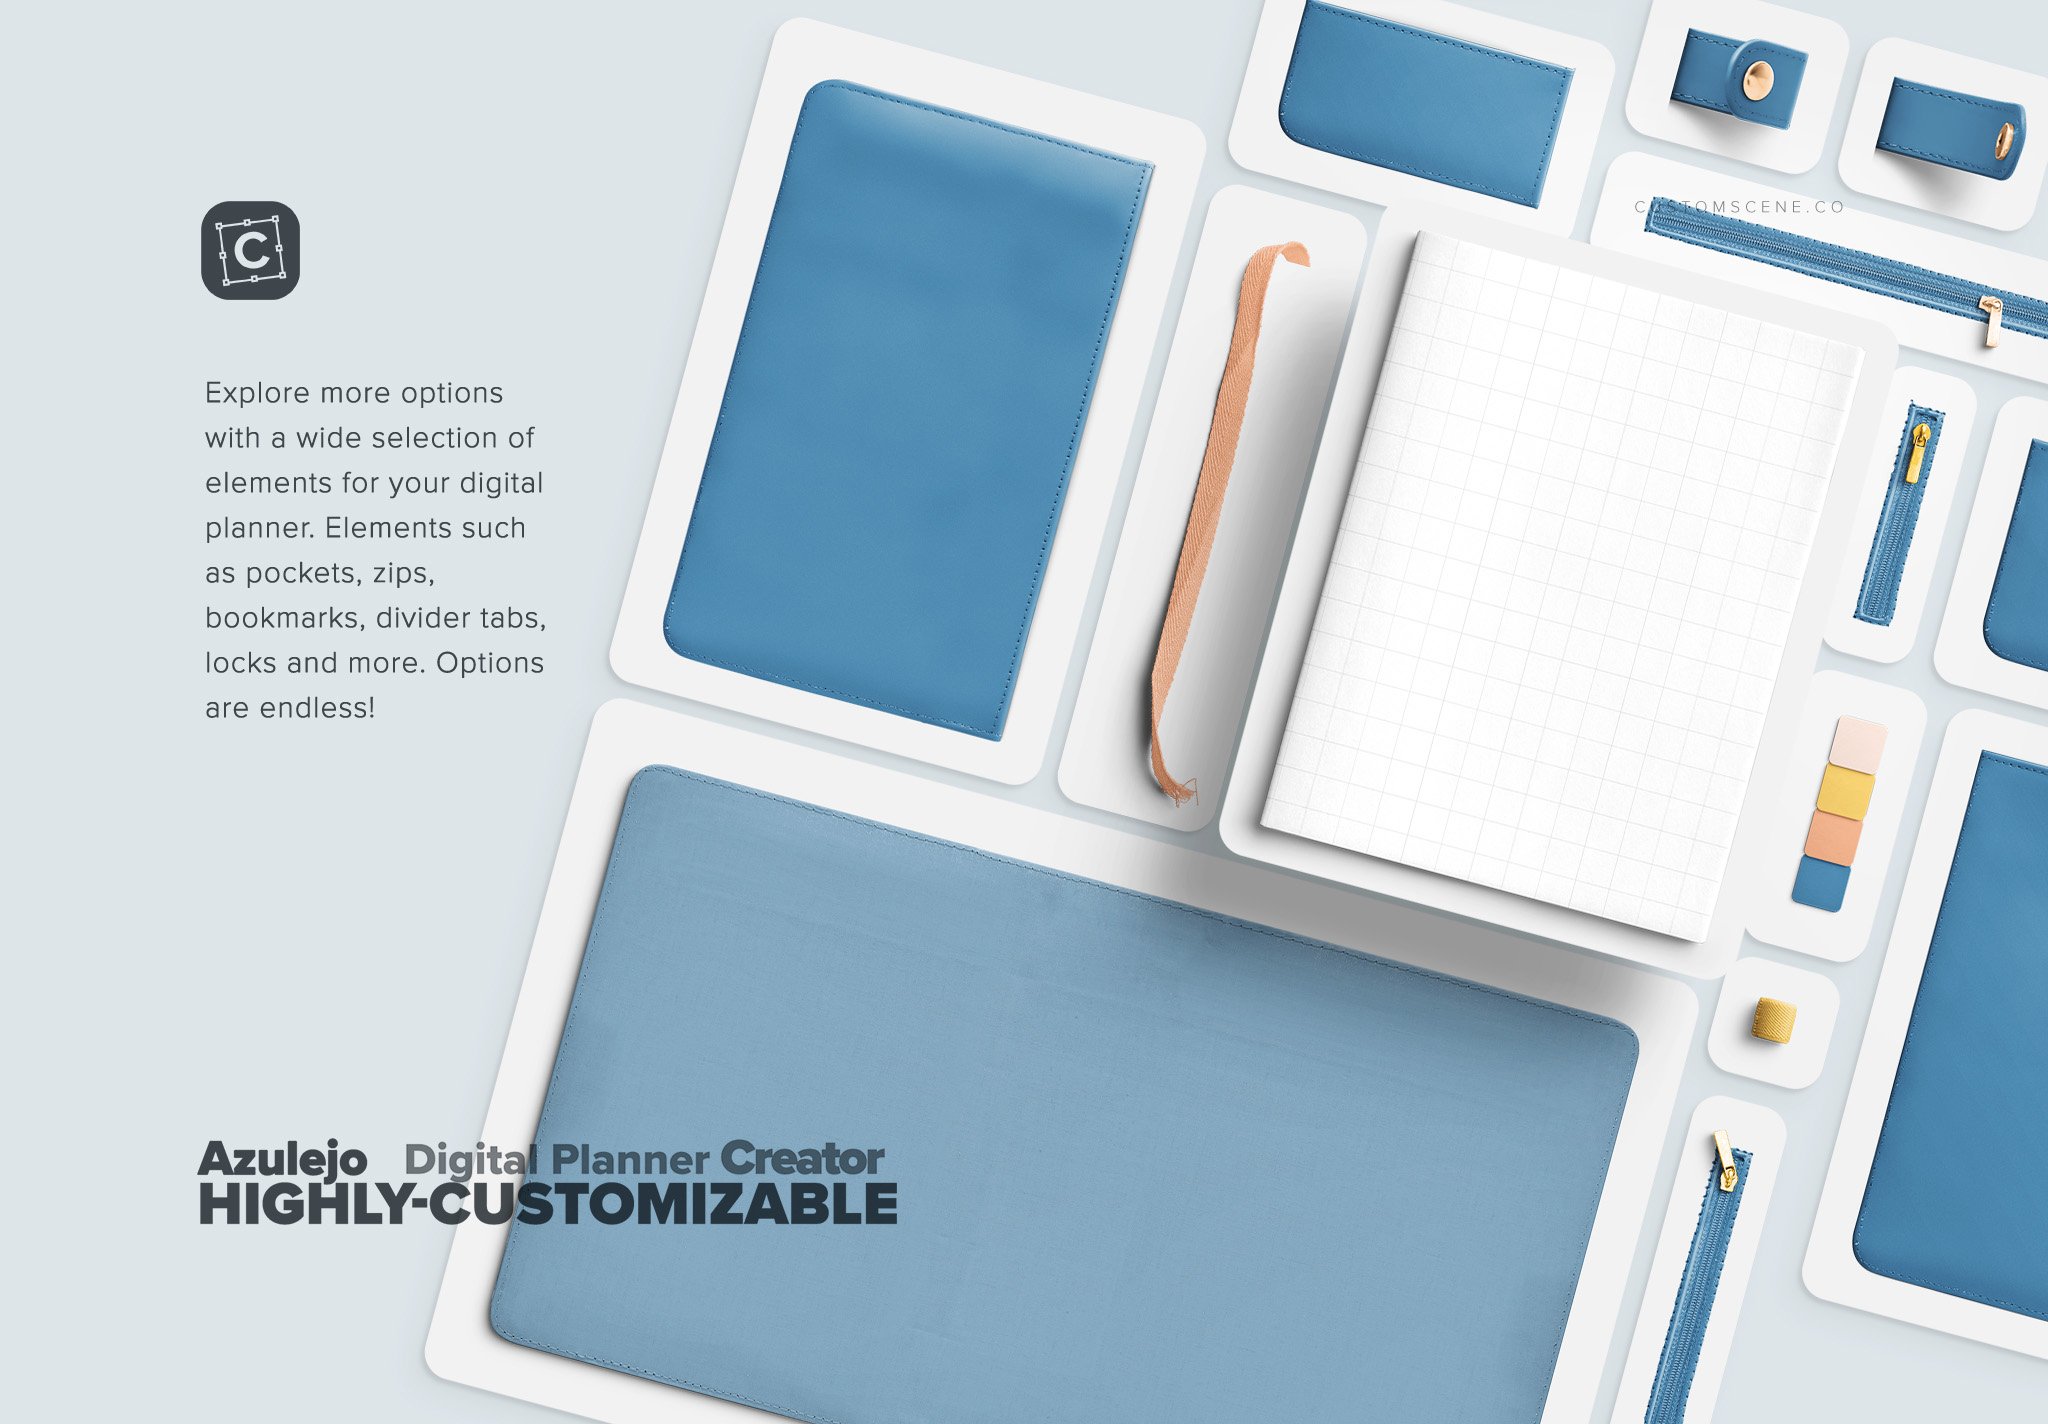 digital planner creator azulejo 03 highly customizable customscene 448